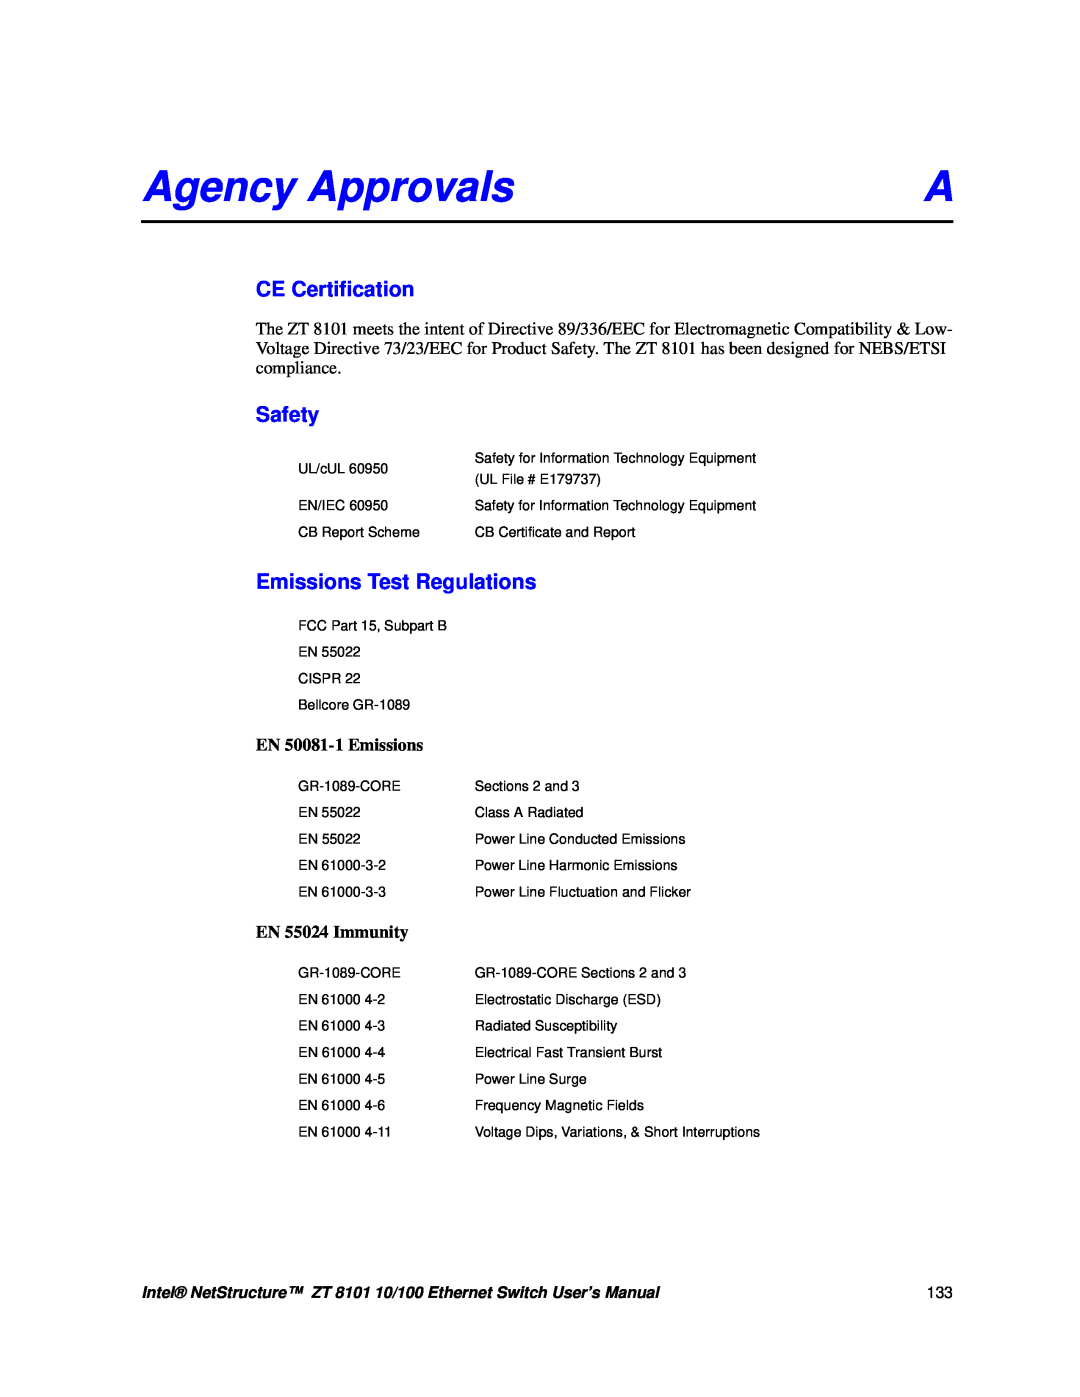 Intel ZT 8101 10/100 user manual Agency Approvals, CE Certification, Safety, Emissions Test Regulations 